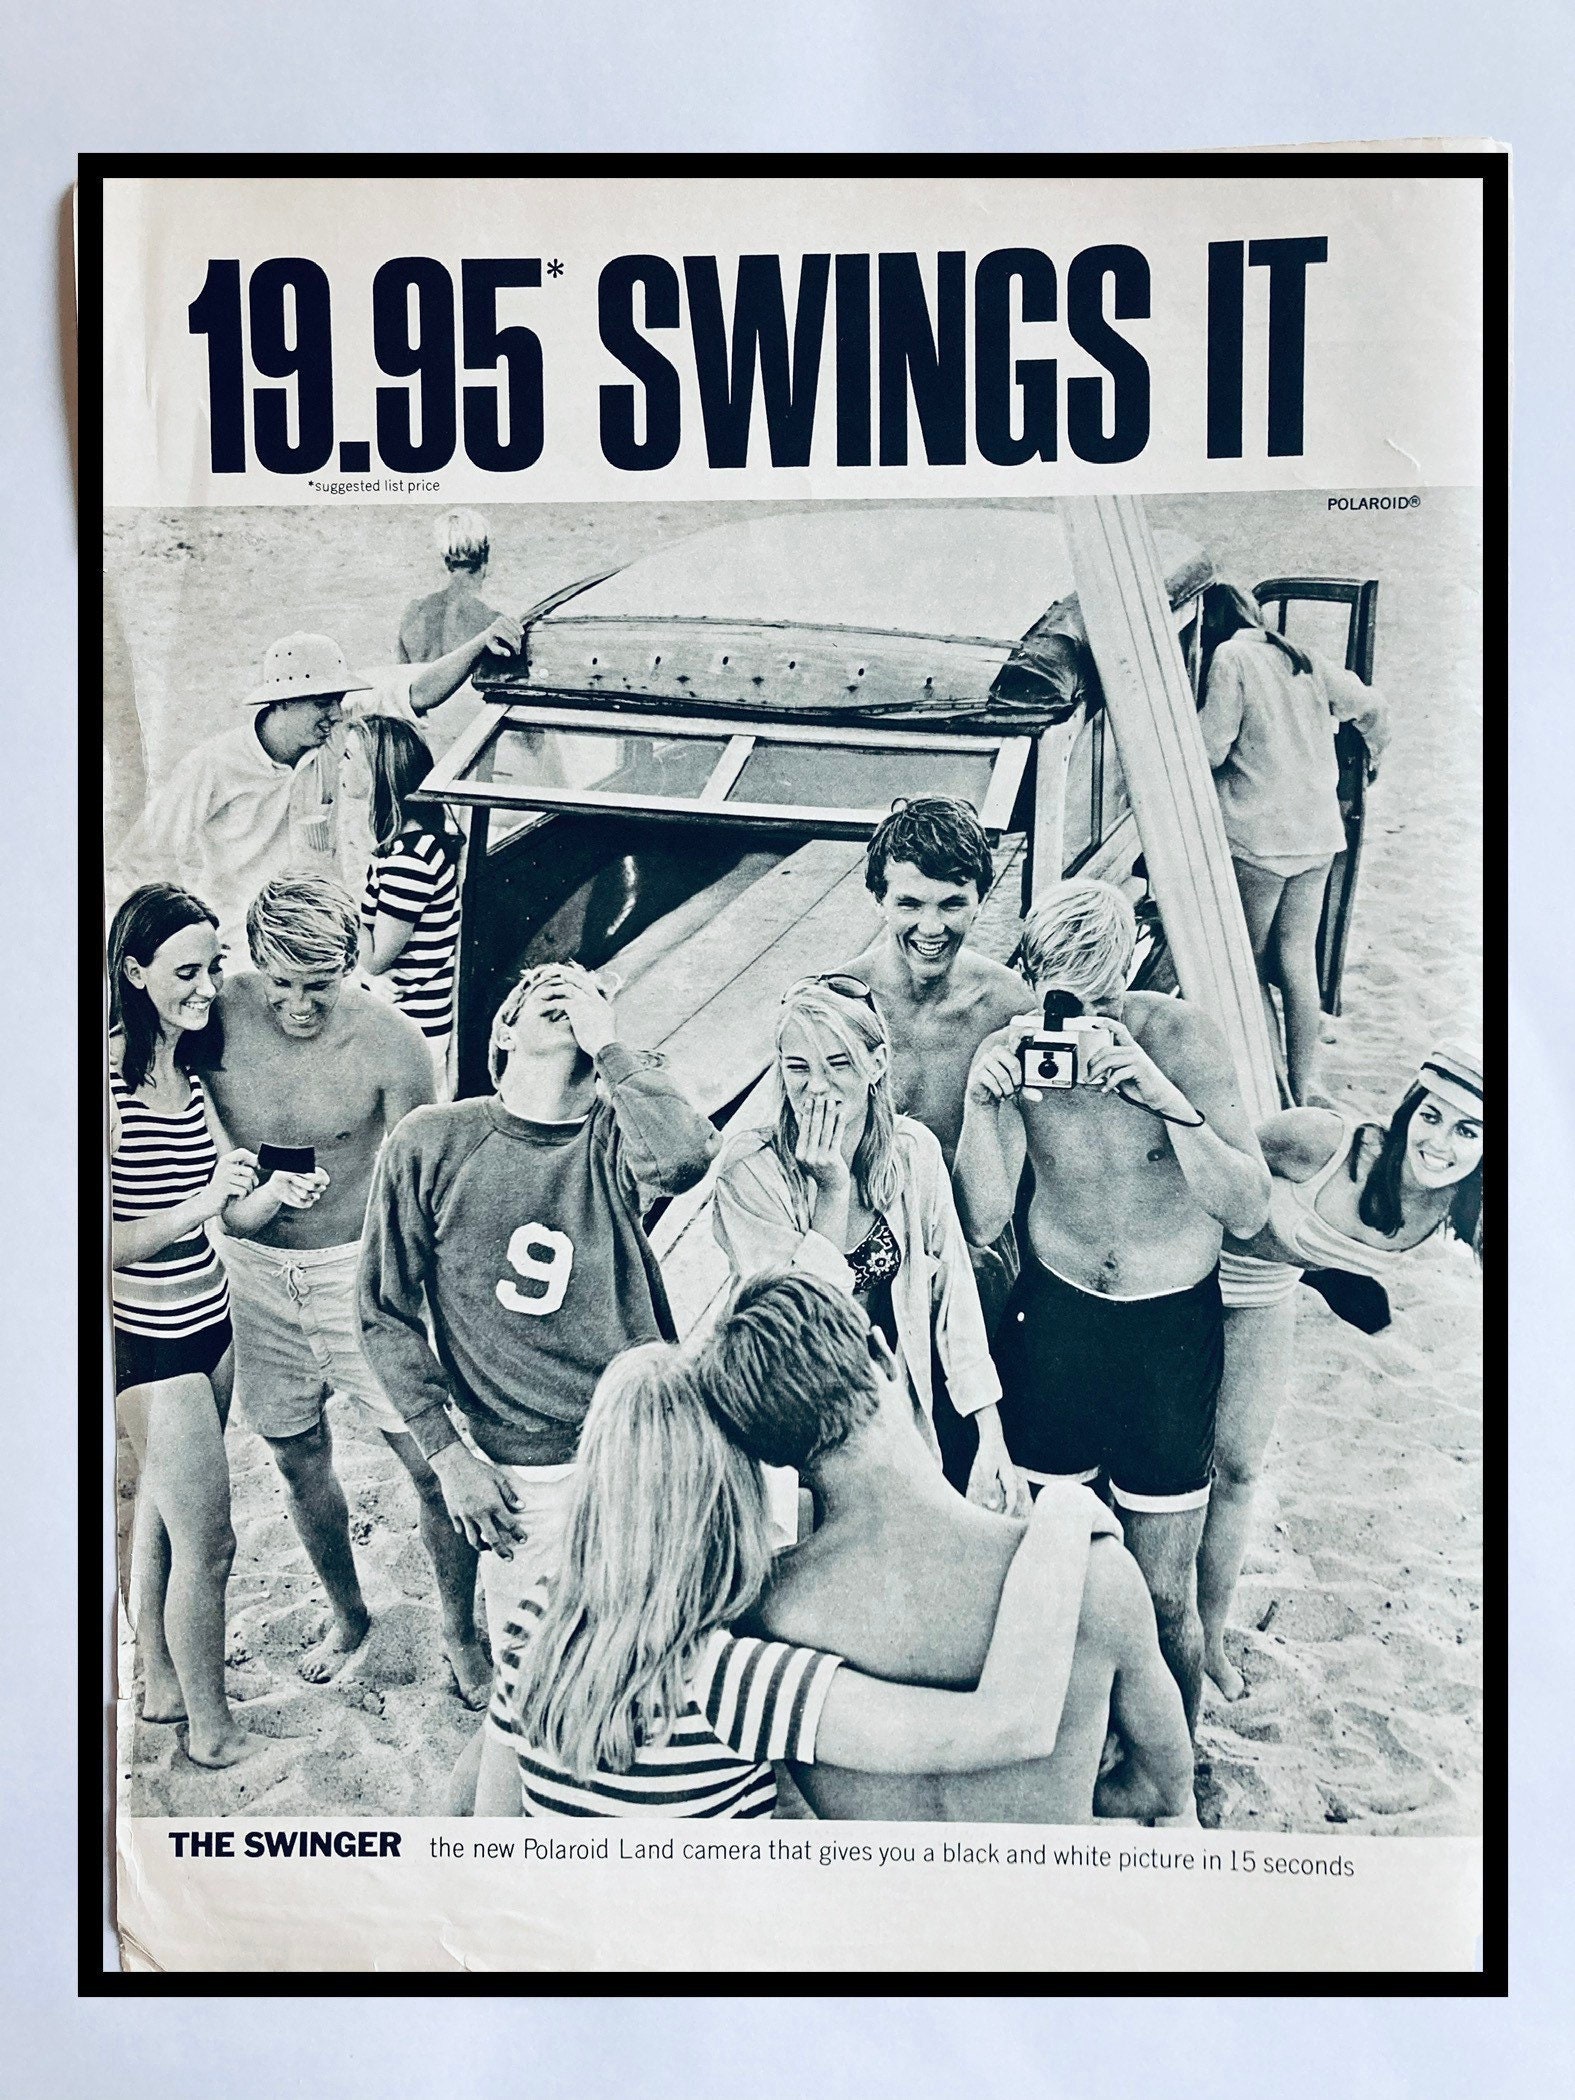 Vtg Polaroid Print Ad 1967 Swinger Camera 19.95 Swings It hq nude photo